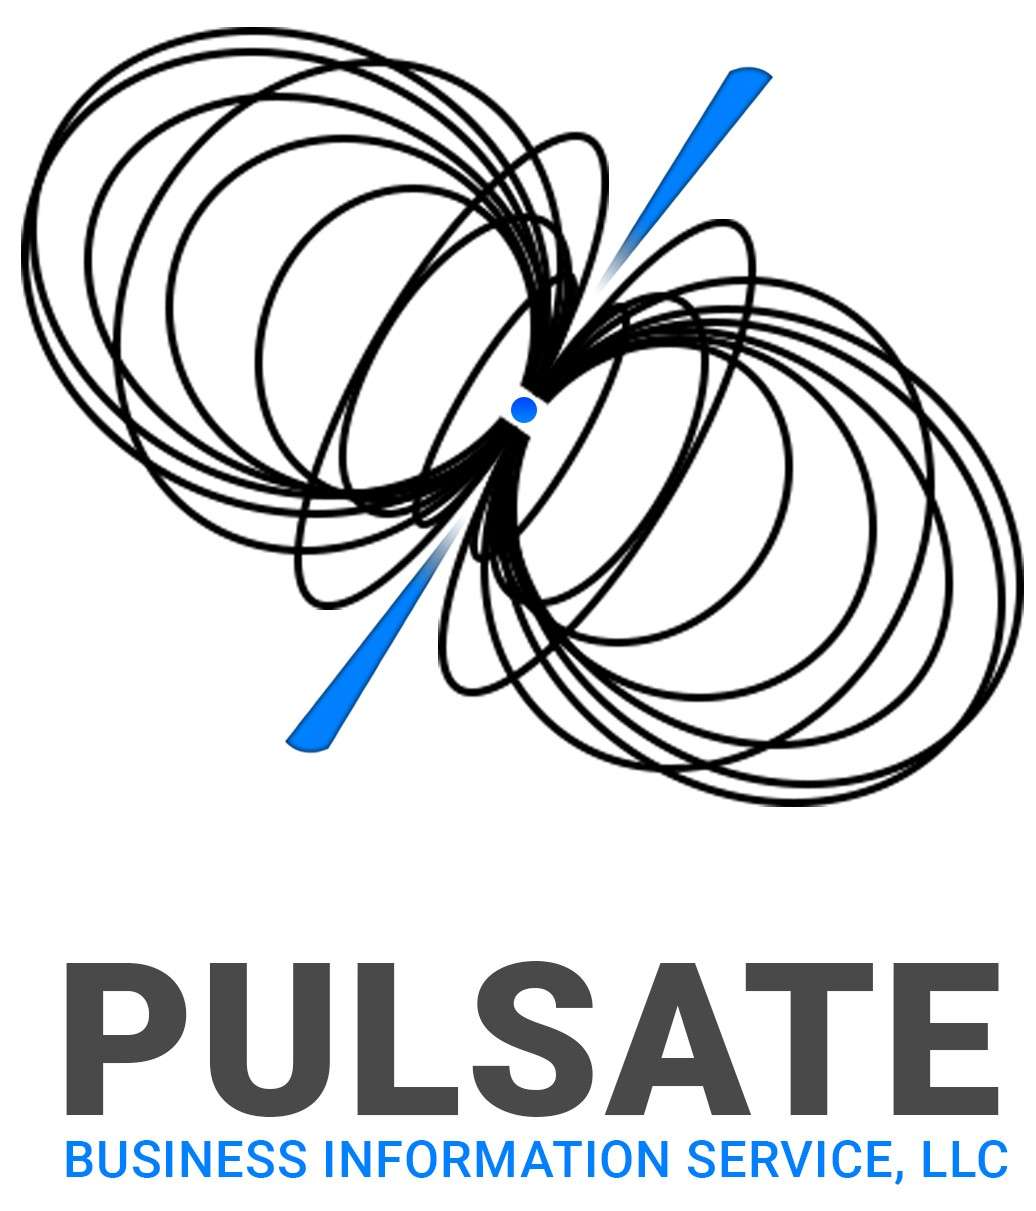 Pulsate Business Information Service, LLC Logo